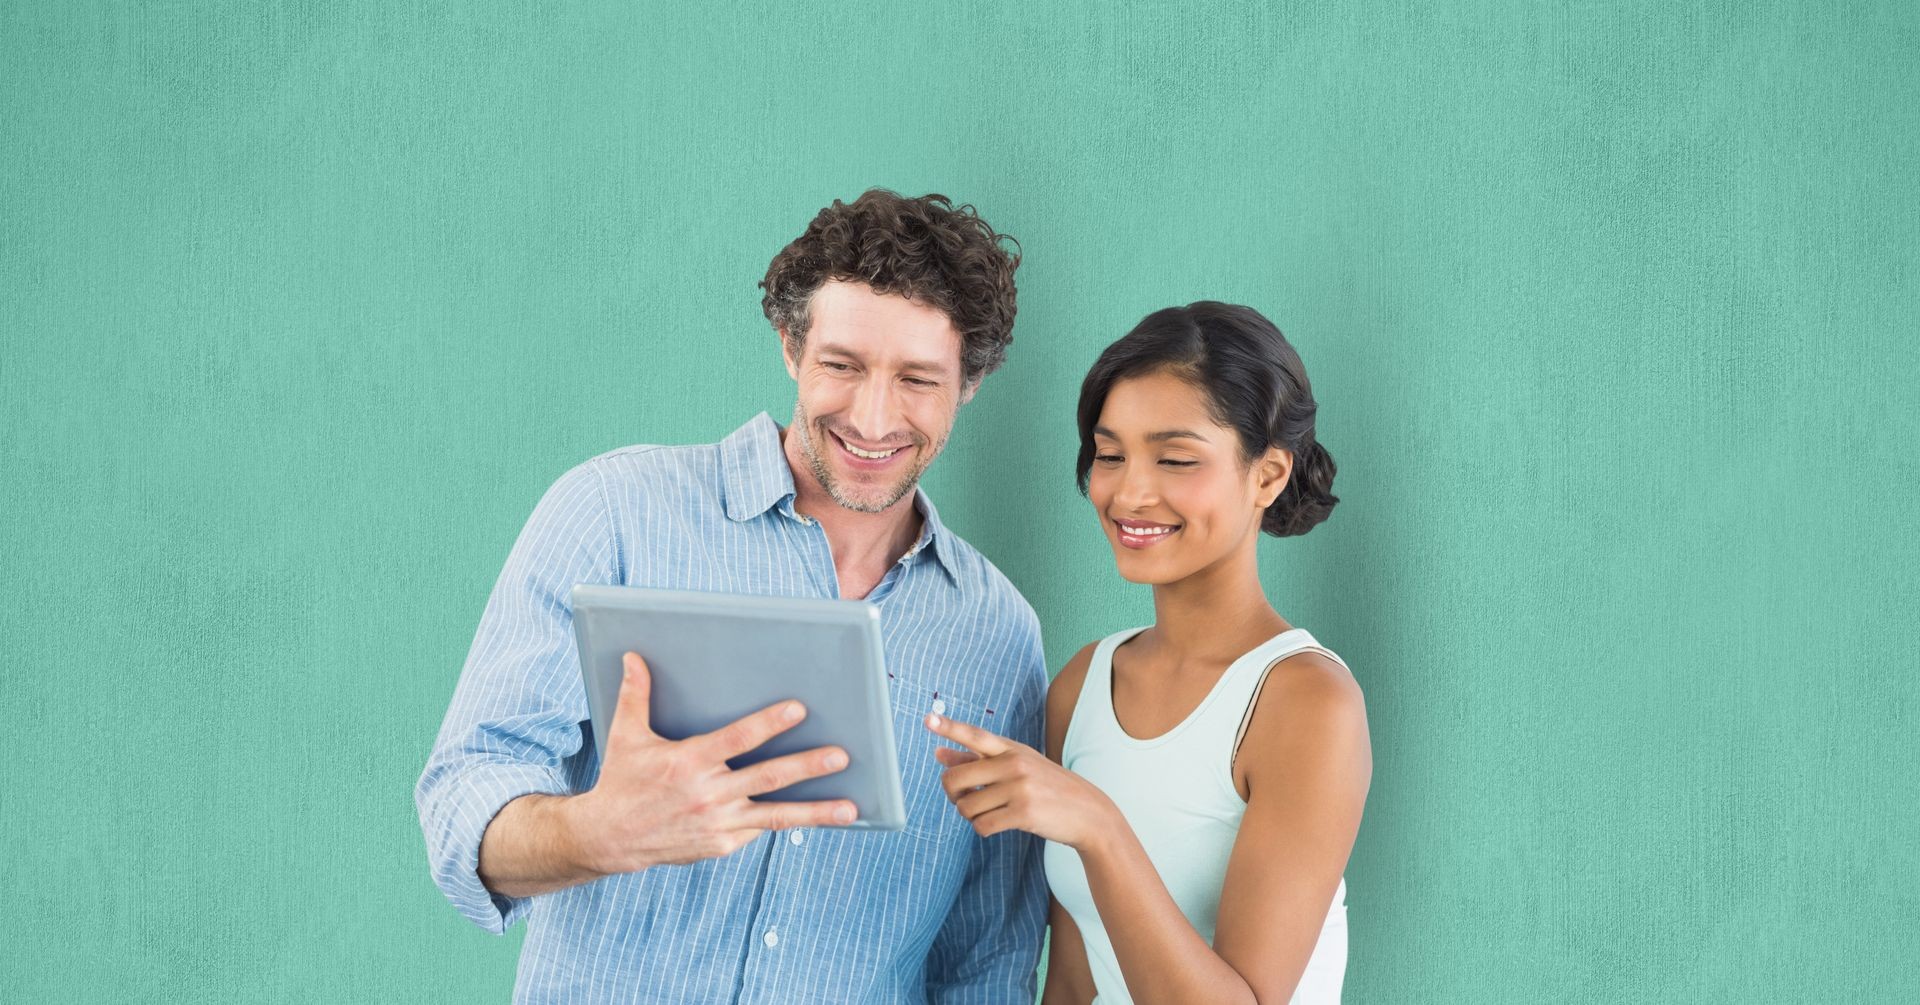 Digital composite of Business people using digital tablet over green background